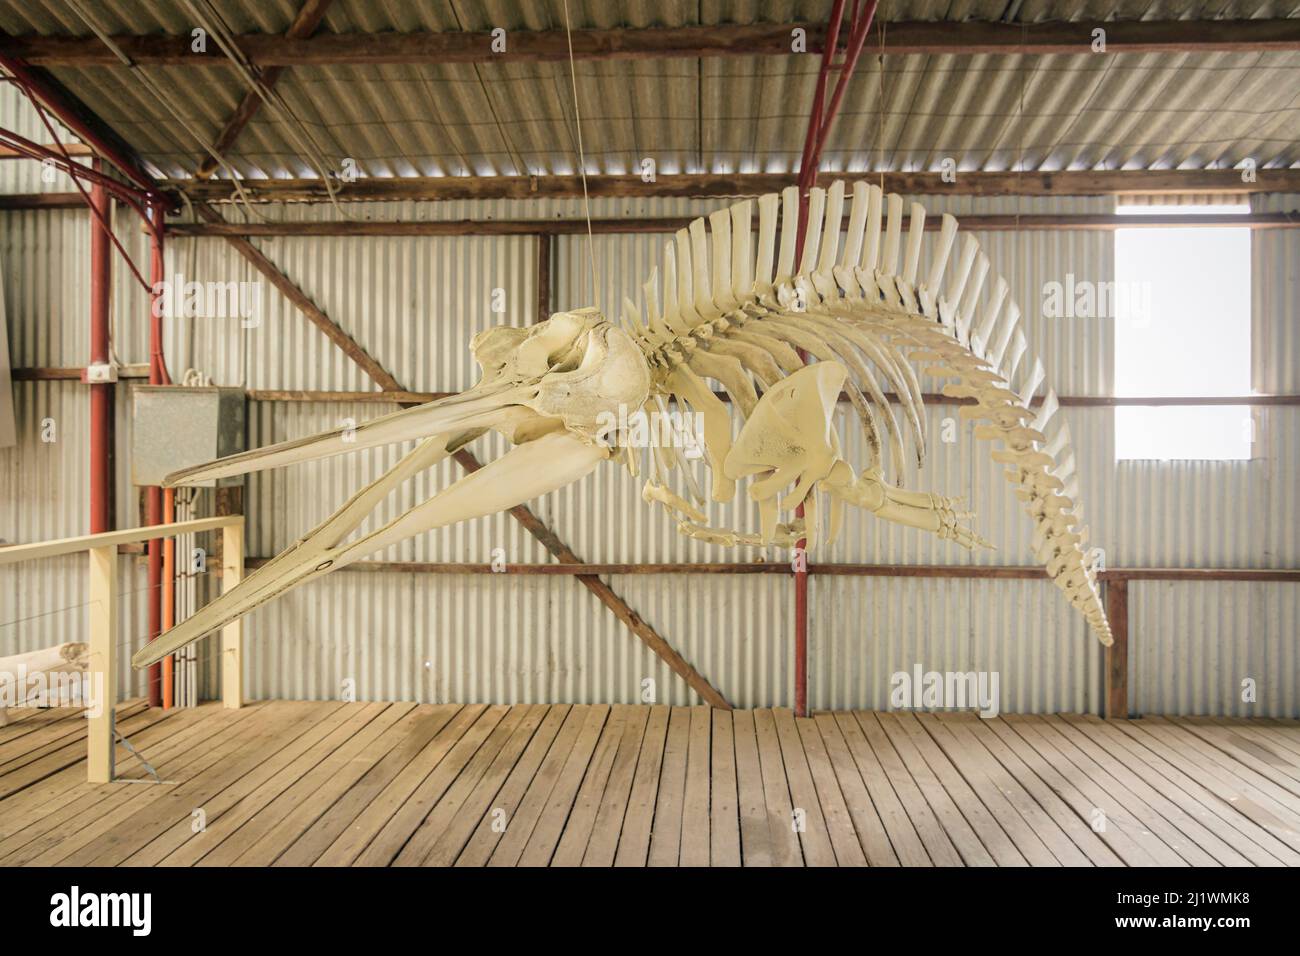 Grays Schnabelskelett-Ausstellung in Albanys historischer Walfangstation in Discovery Bay, Albany, Westaustralien Stockfoto